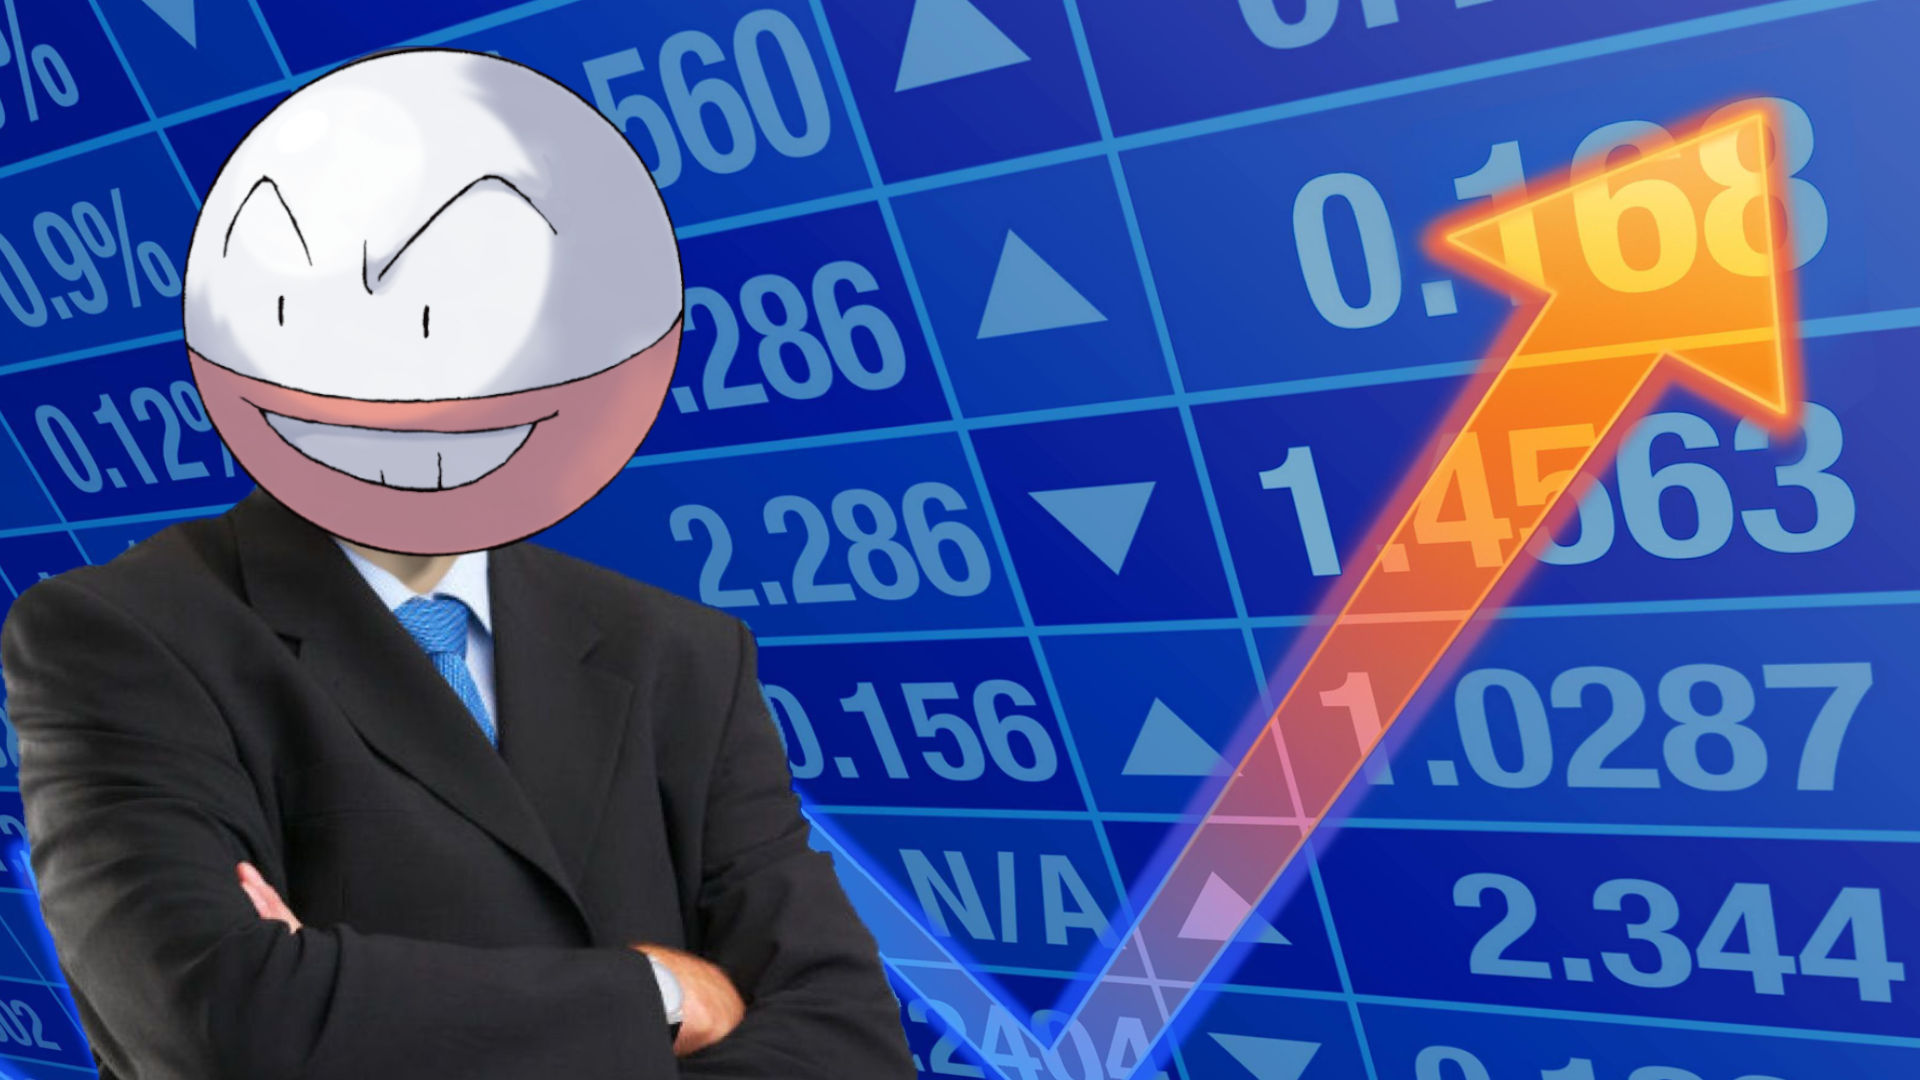 The Pokémon Company’s record financial report suggests stonks aplenty